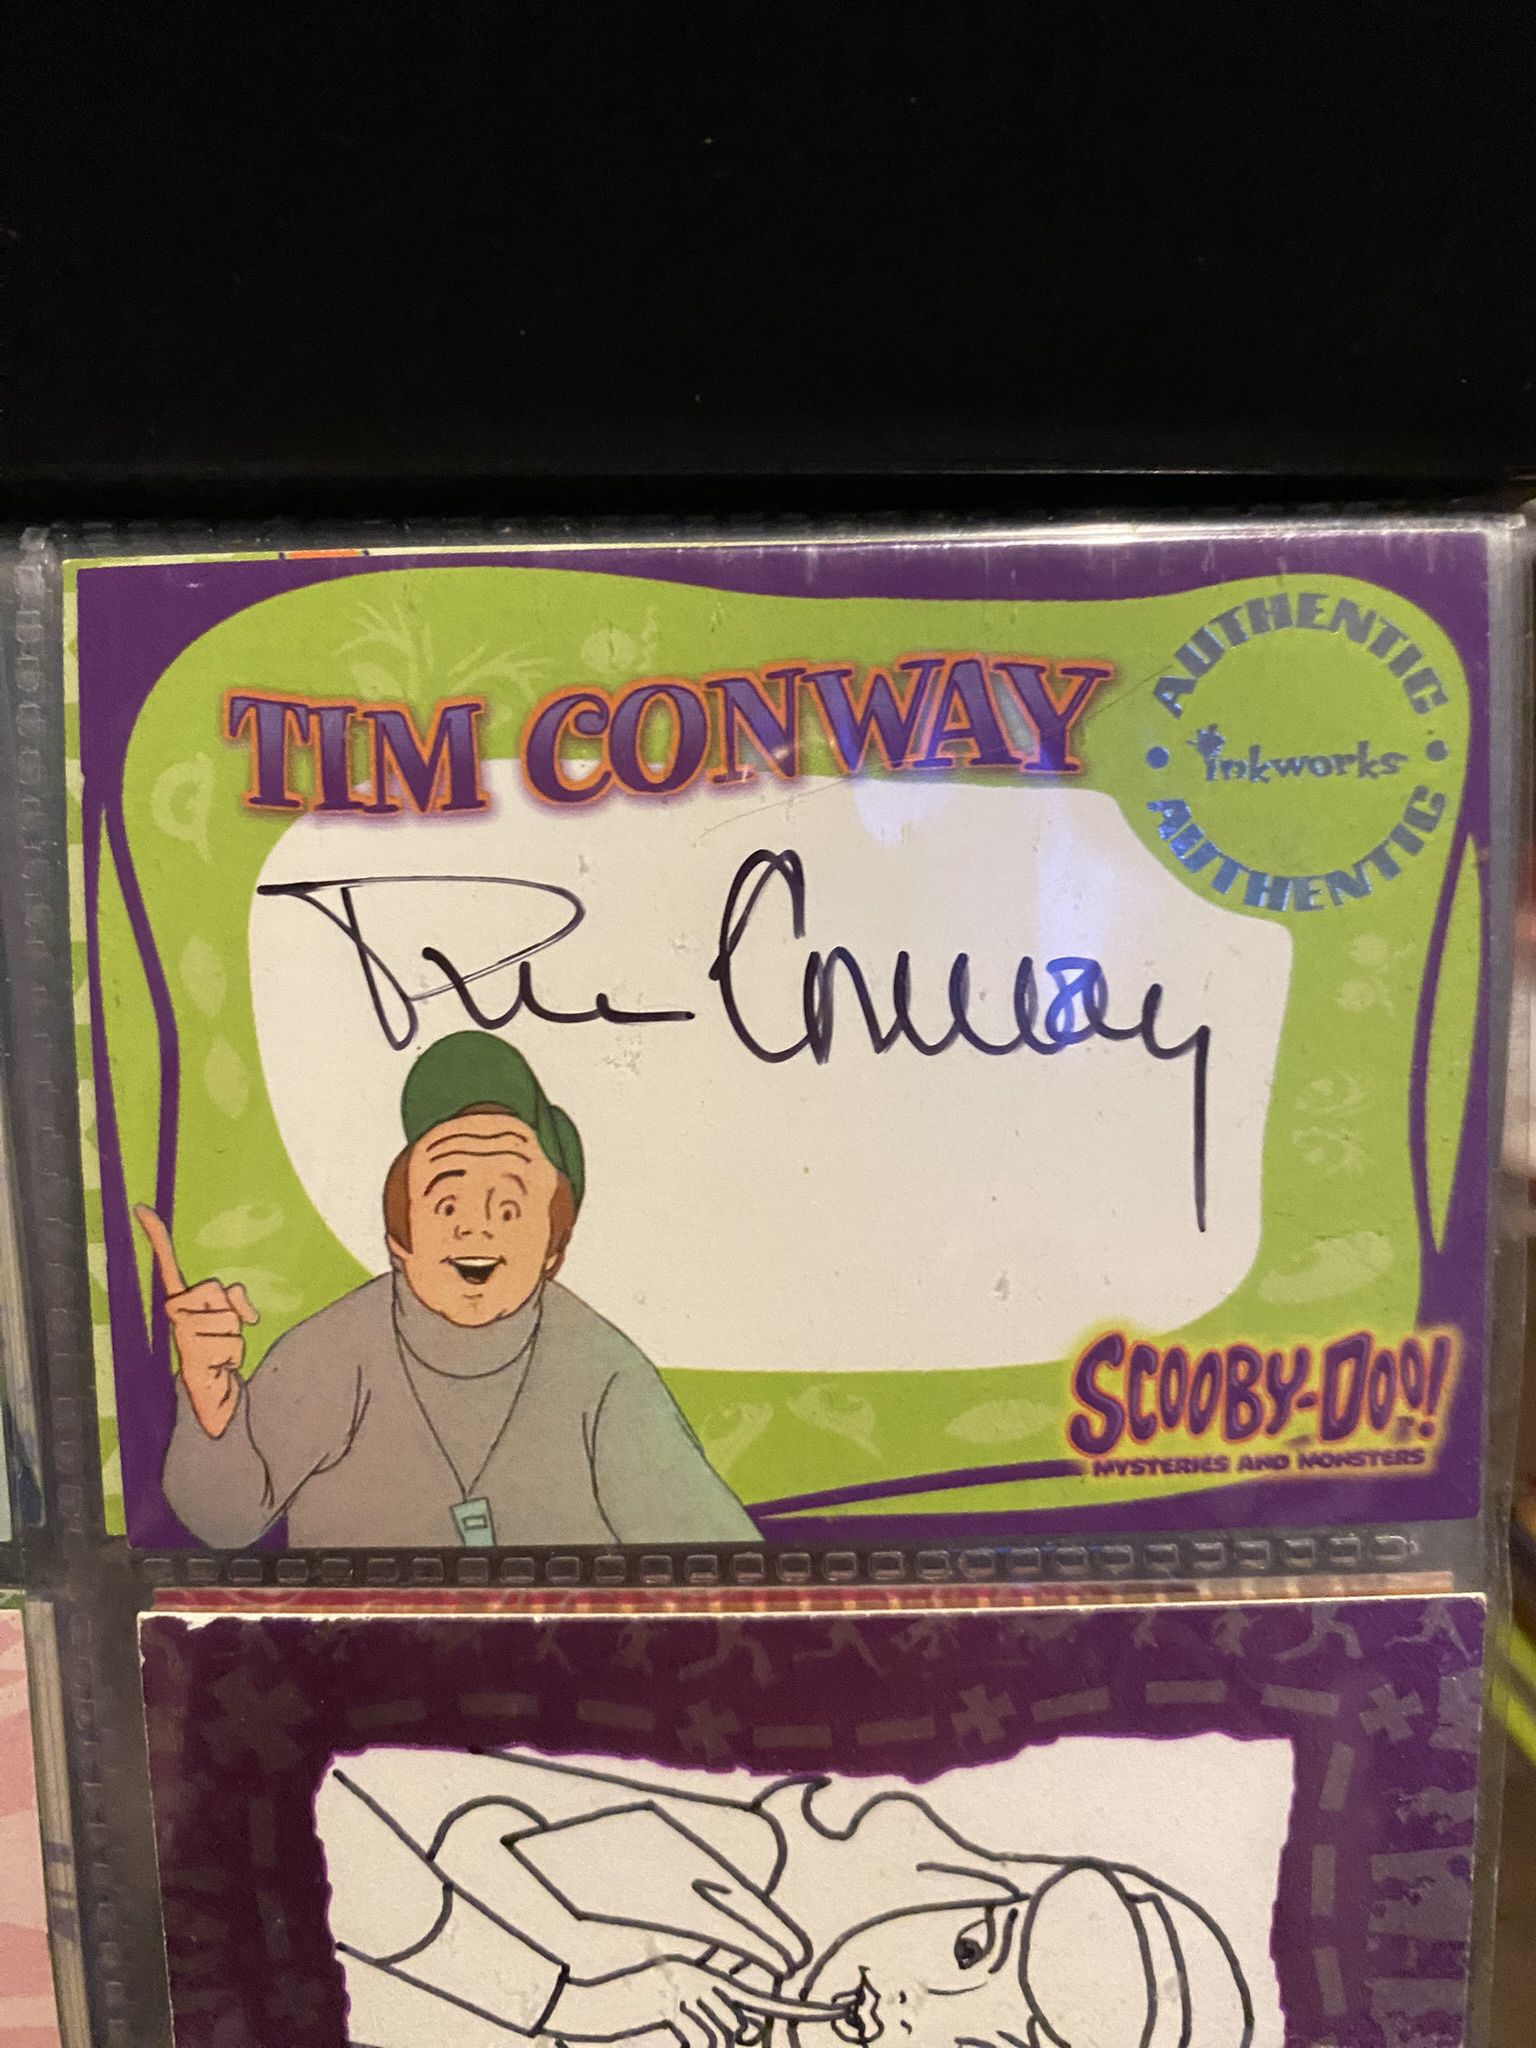 Scooby doo collectors cards